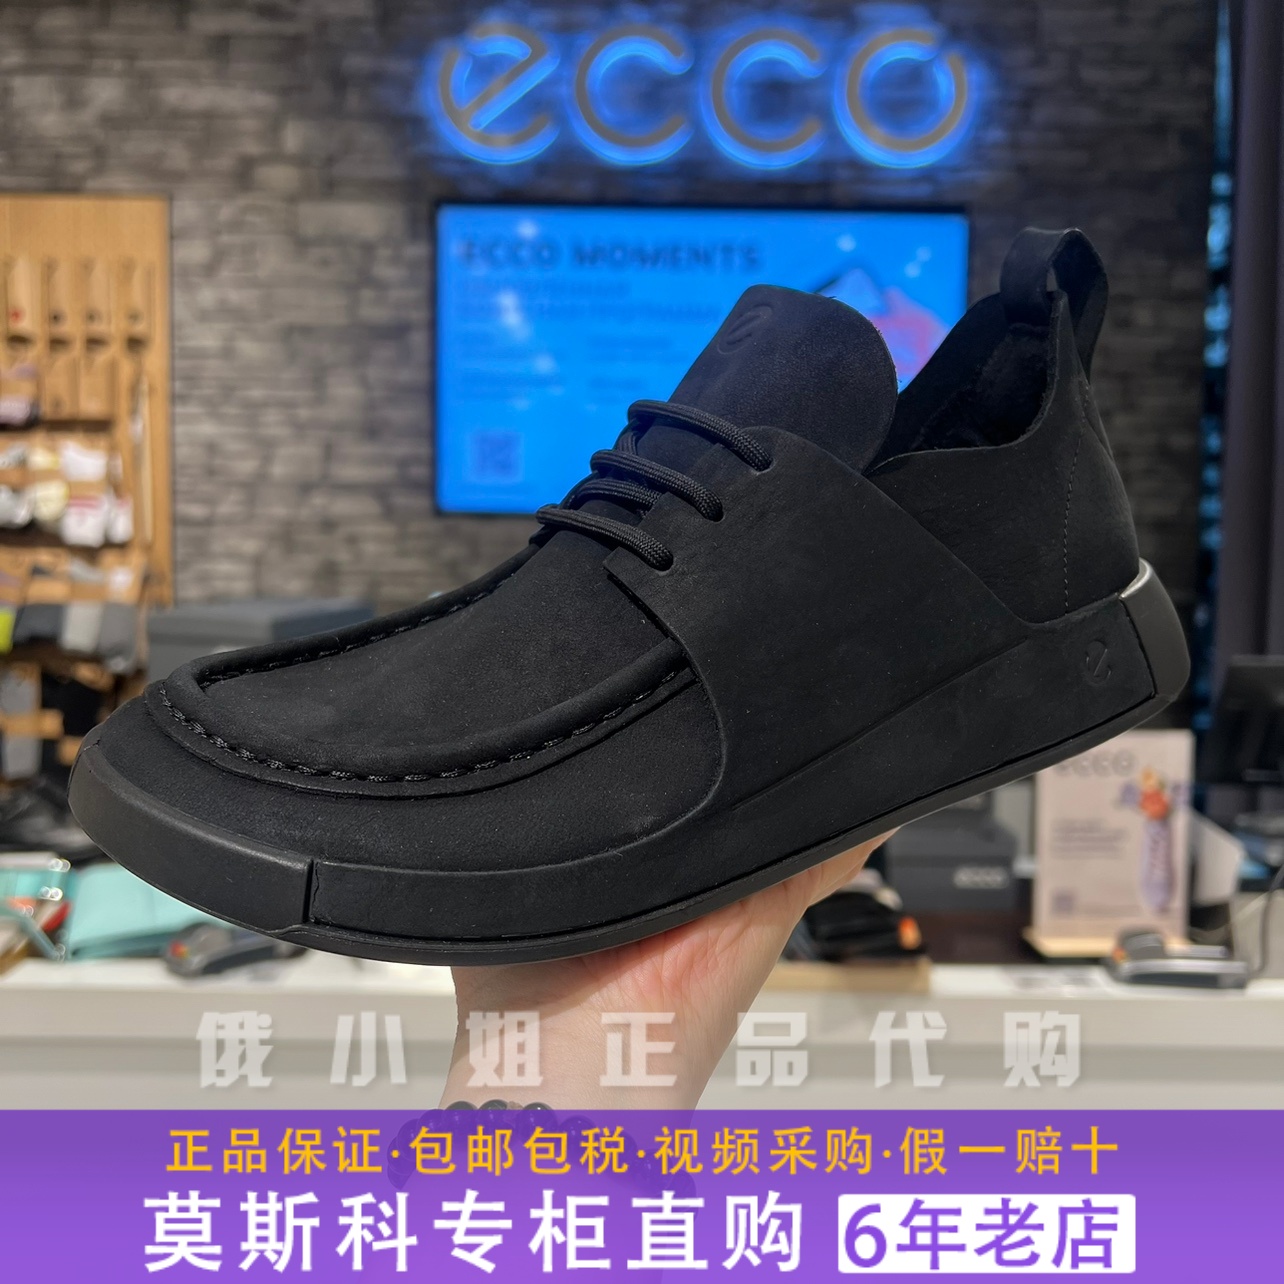 ECCO爱步男鞋春夏乐福鞋百搭系带时尚休闲皮鞋 科摩524204